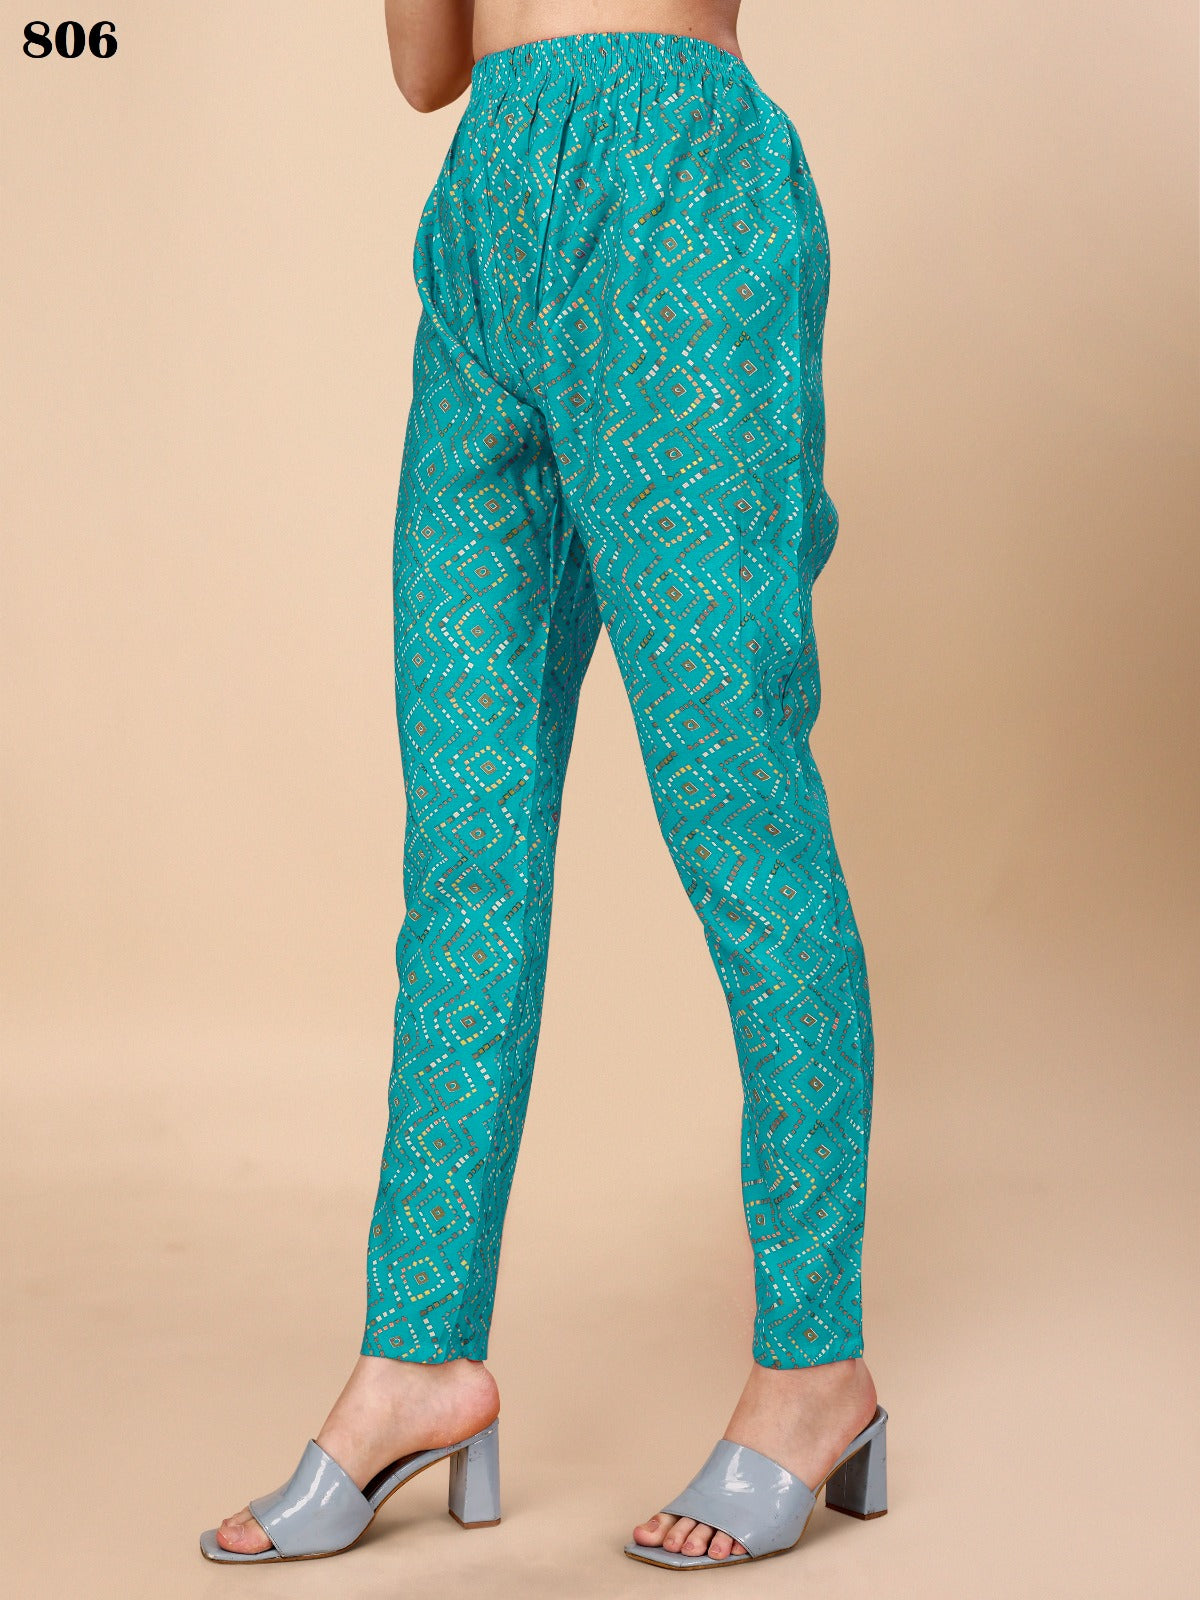 Vol 8 806-807 Beriston Cotton Readymade Pant Style Suits